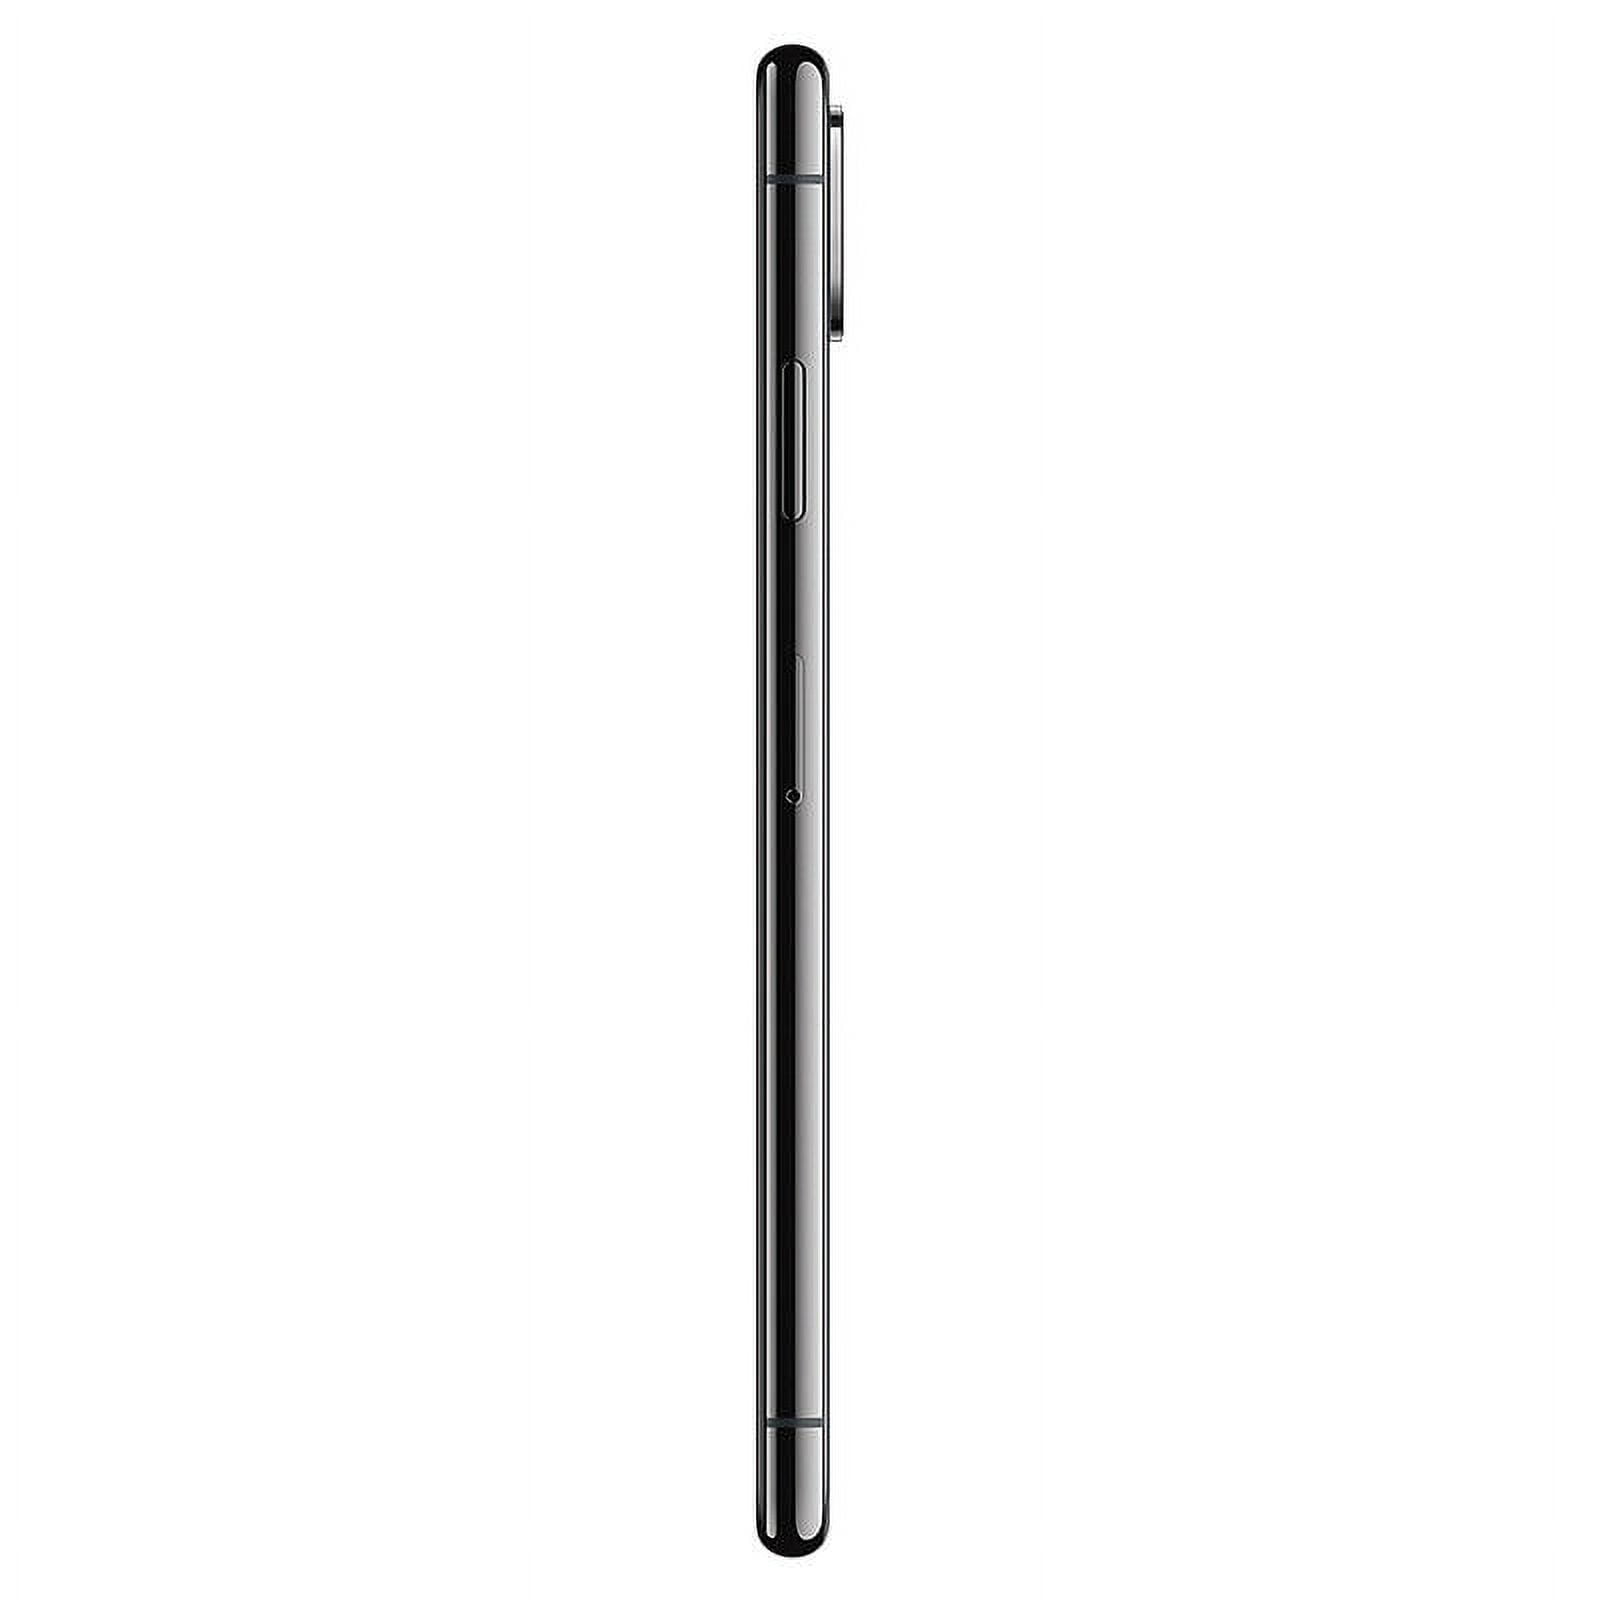 Apple iPhone Xs Max, 64gb, Space Gray - Unlocked (Renewed Premium)